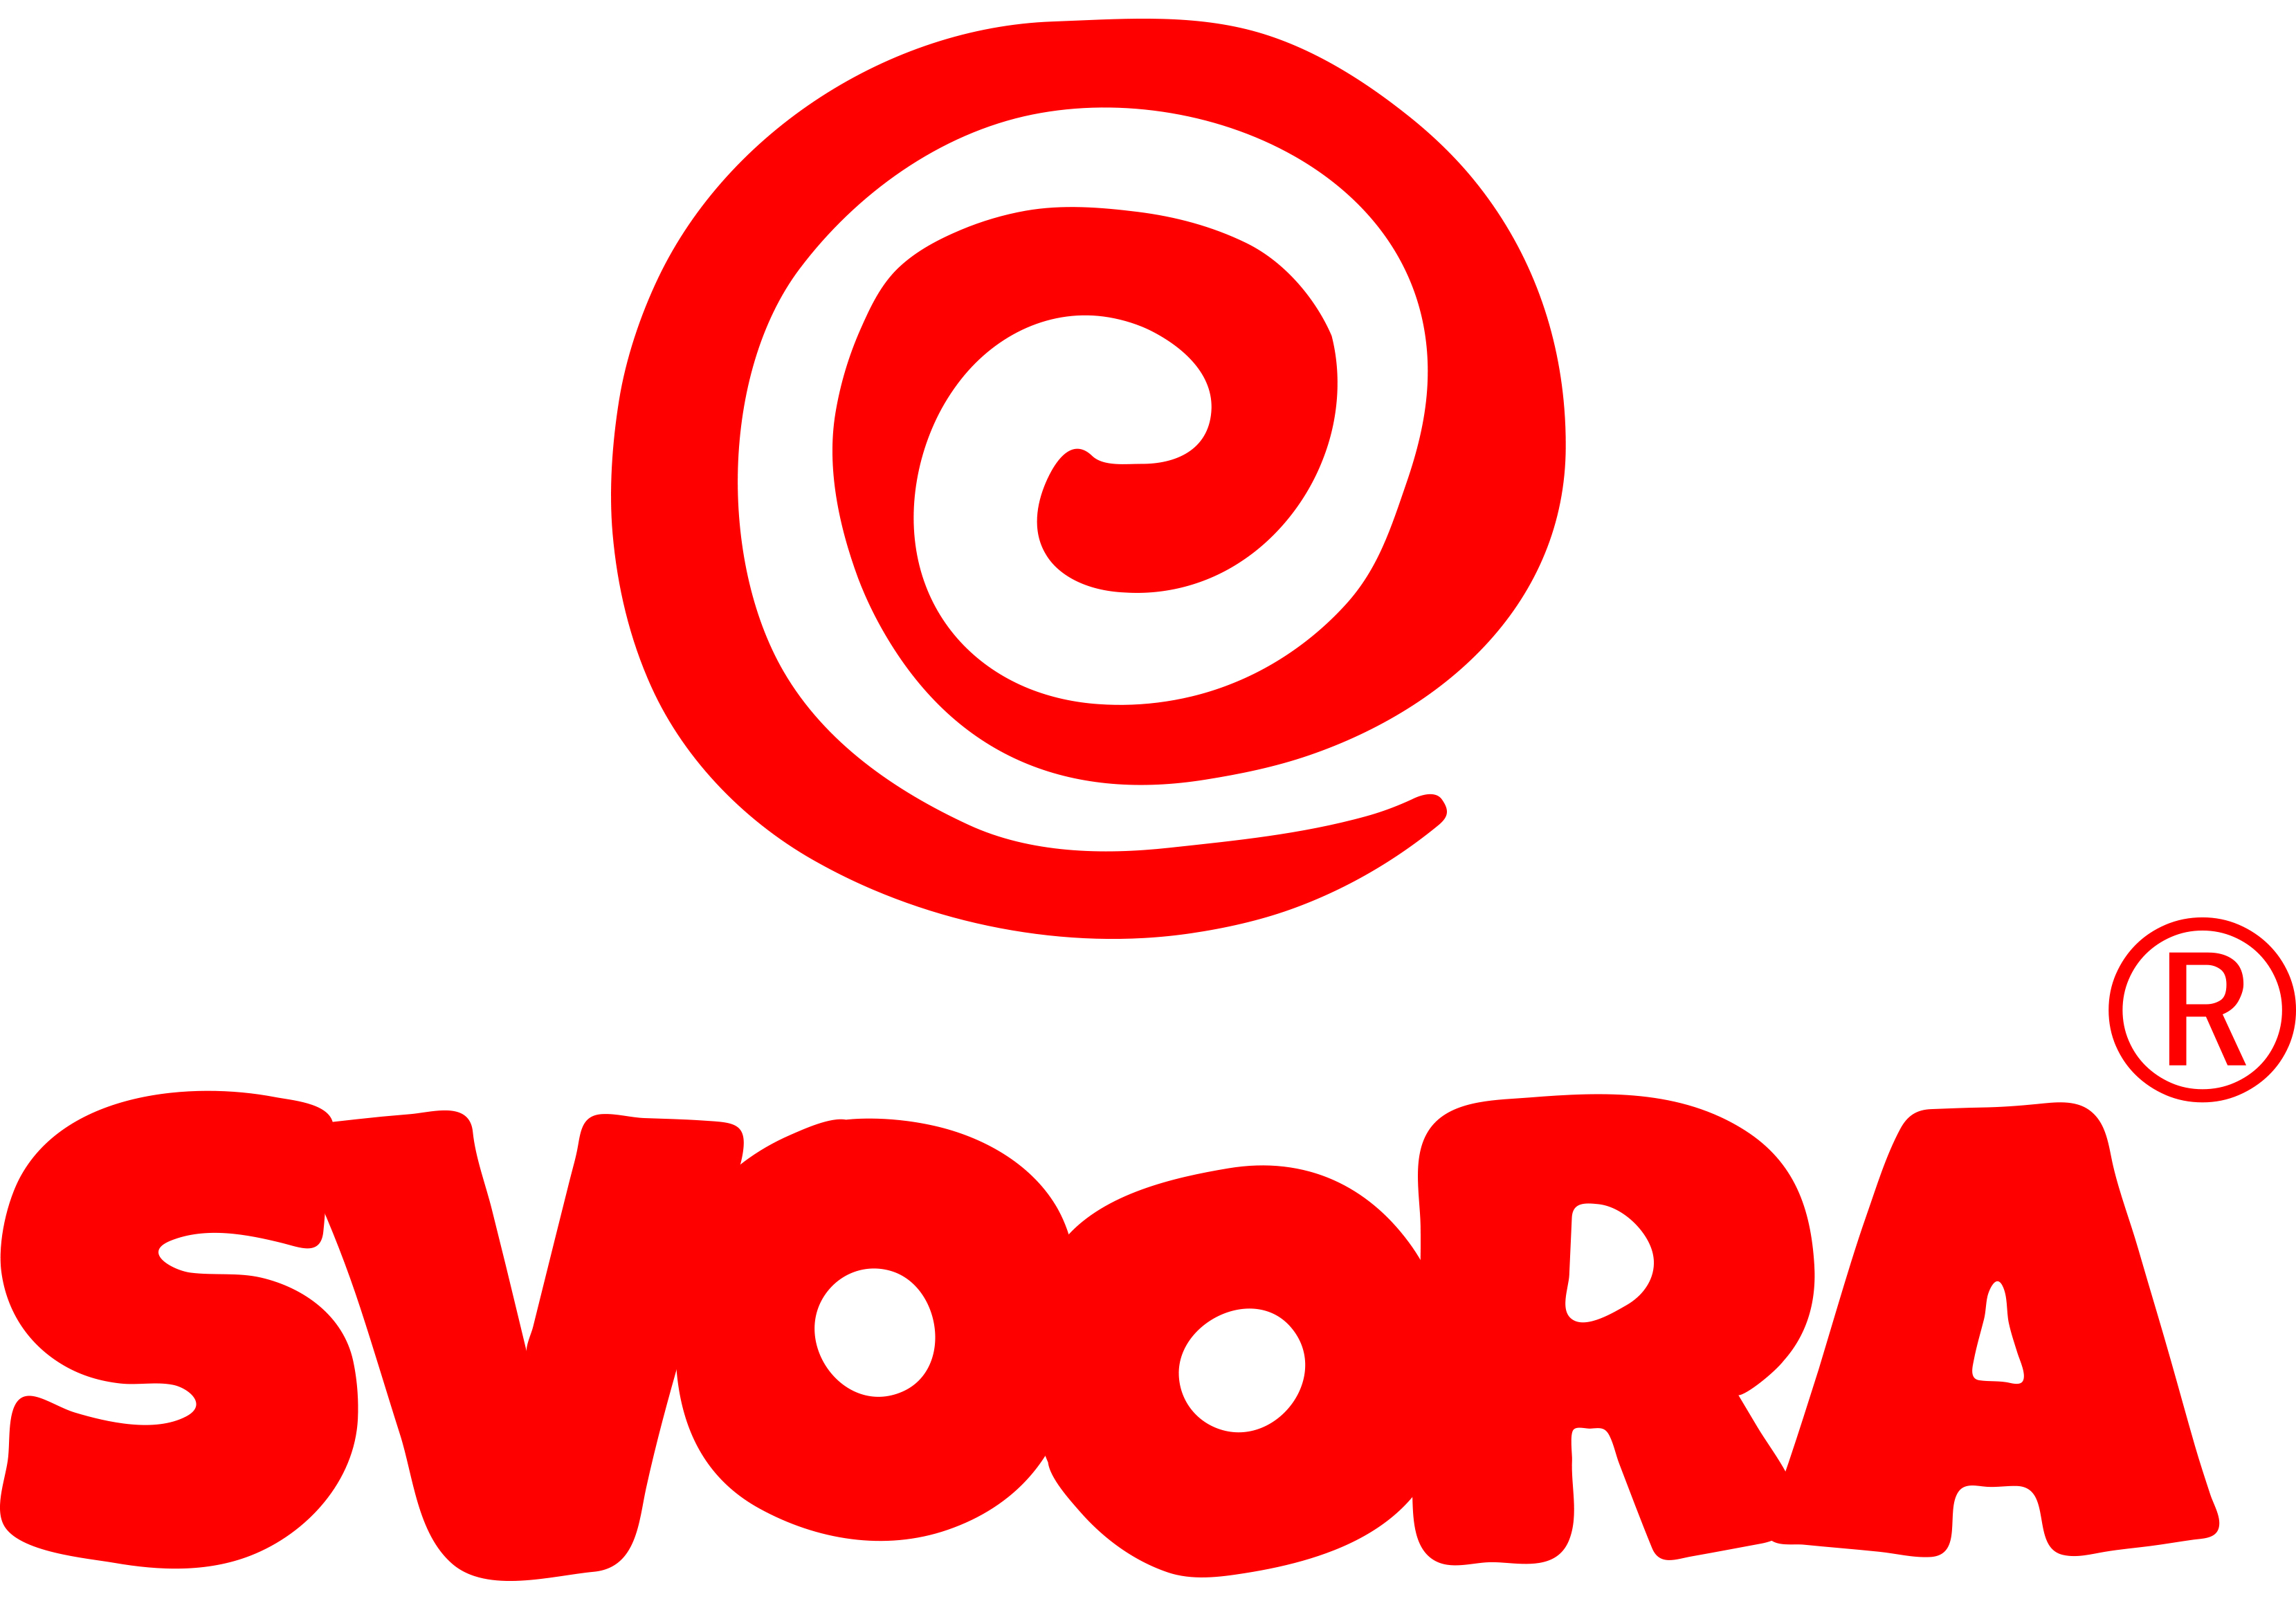 Textbilder - Svoora Logo red